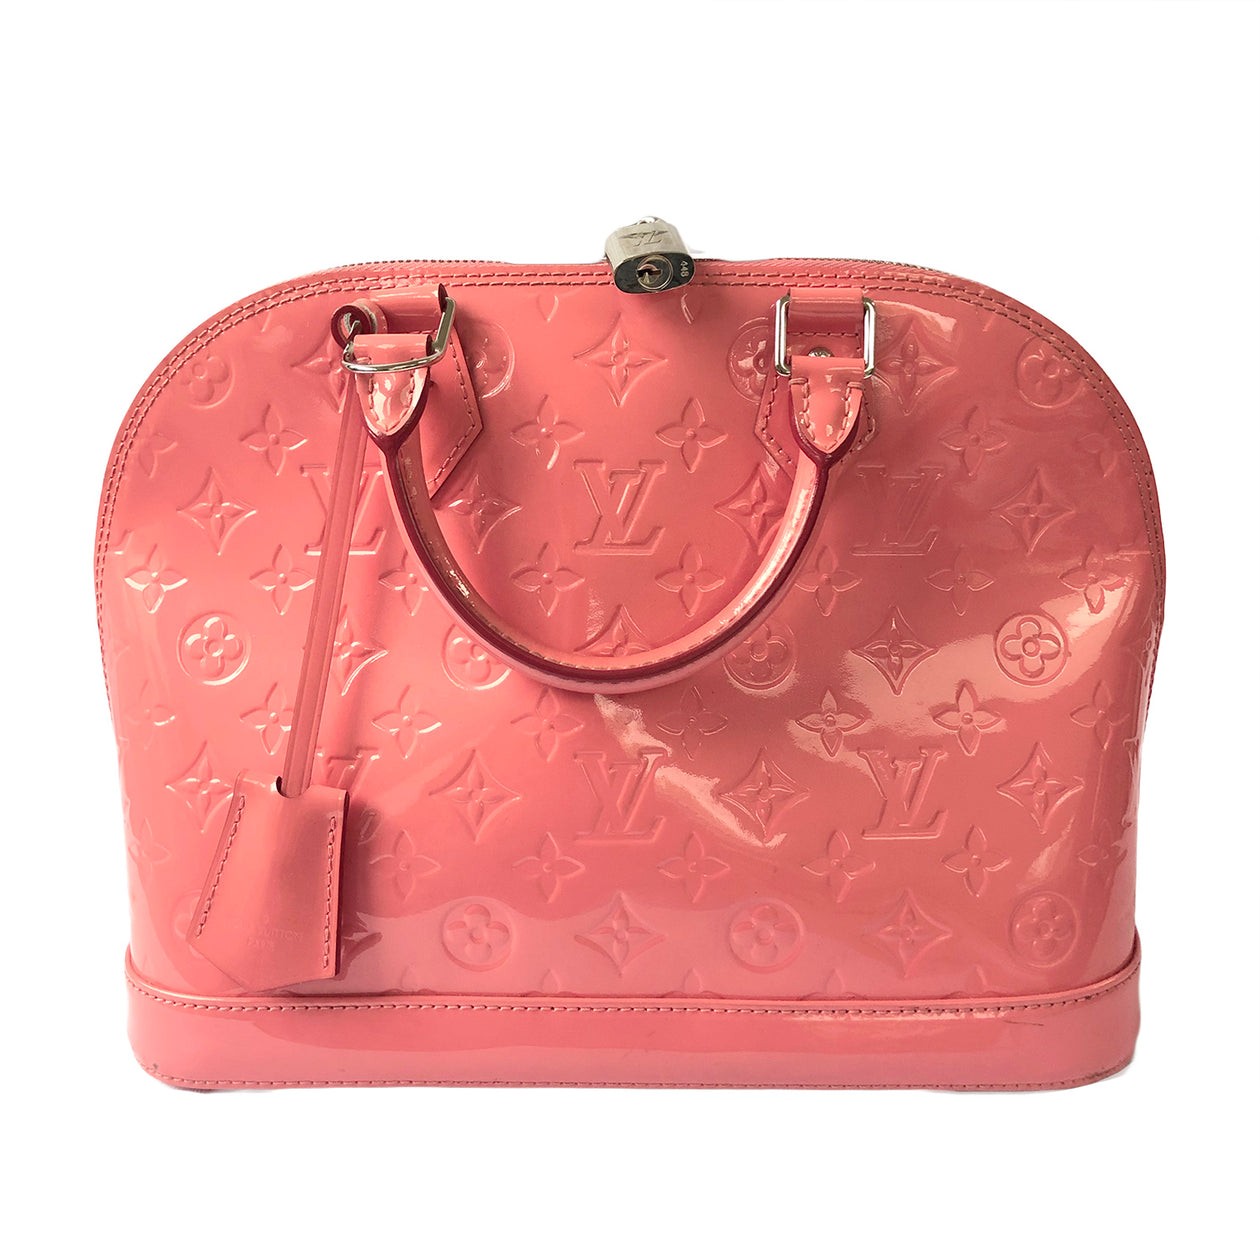 Louis Vuitton Authenticated Patent Leather Handbag